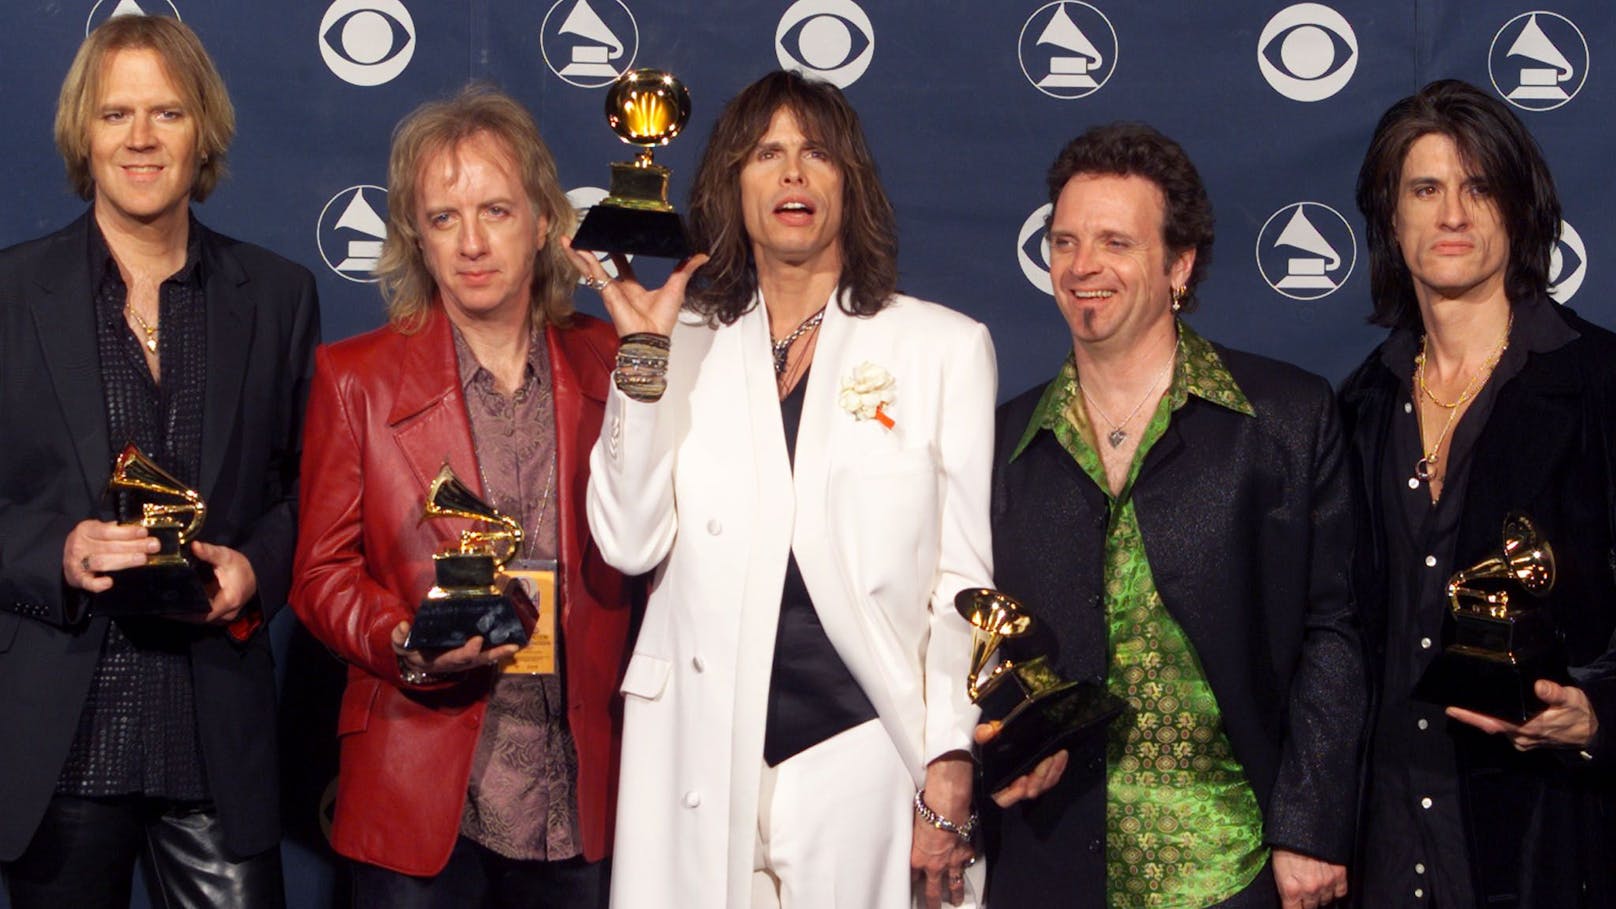 Steven Tyler ist Frontman der Band "Aerosmith".